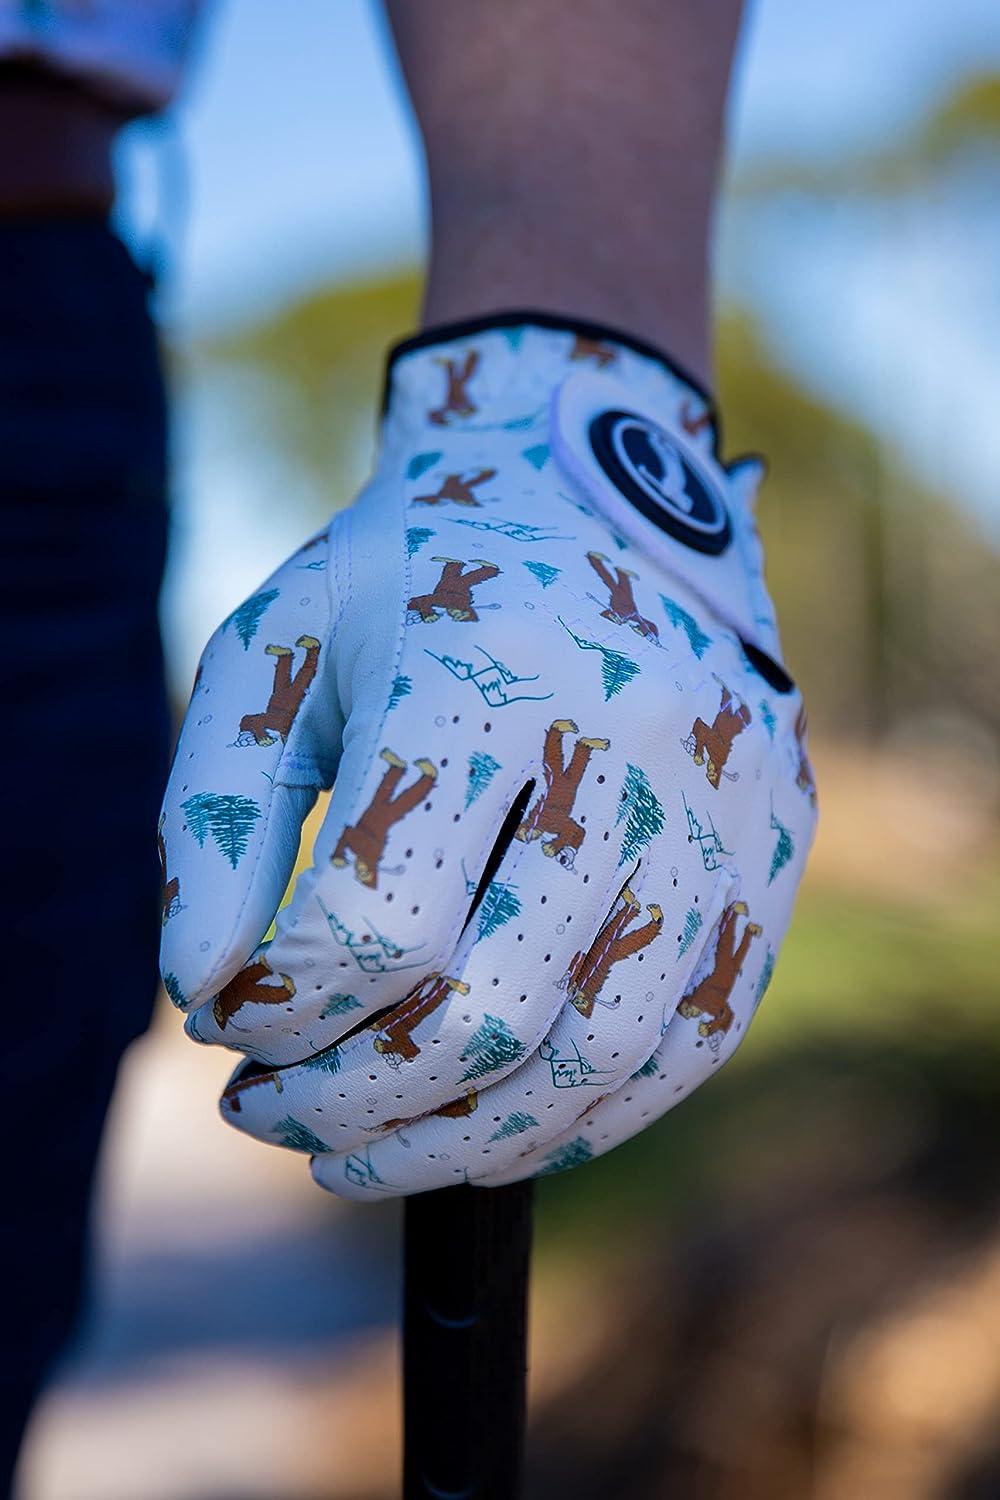 Chameleon Golf Mens Golf Glove Golf Gloves - Golf Accessory Men - Cabretta Golf Gloves - Golf Gift for Golfers - Man Golf Gifts - Golf Equipment Bigfoot Flyer Large Left